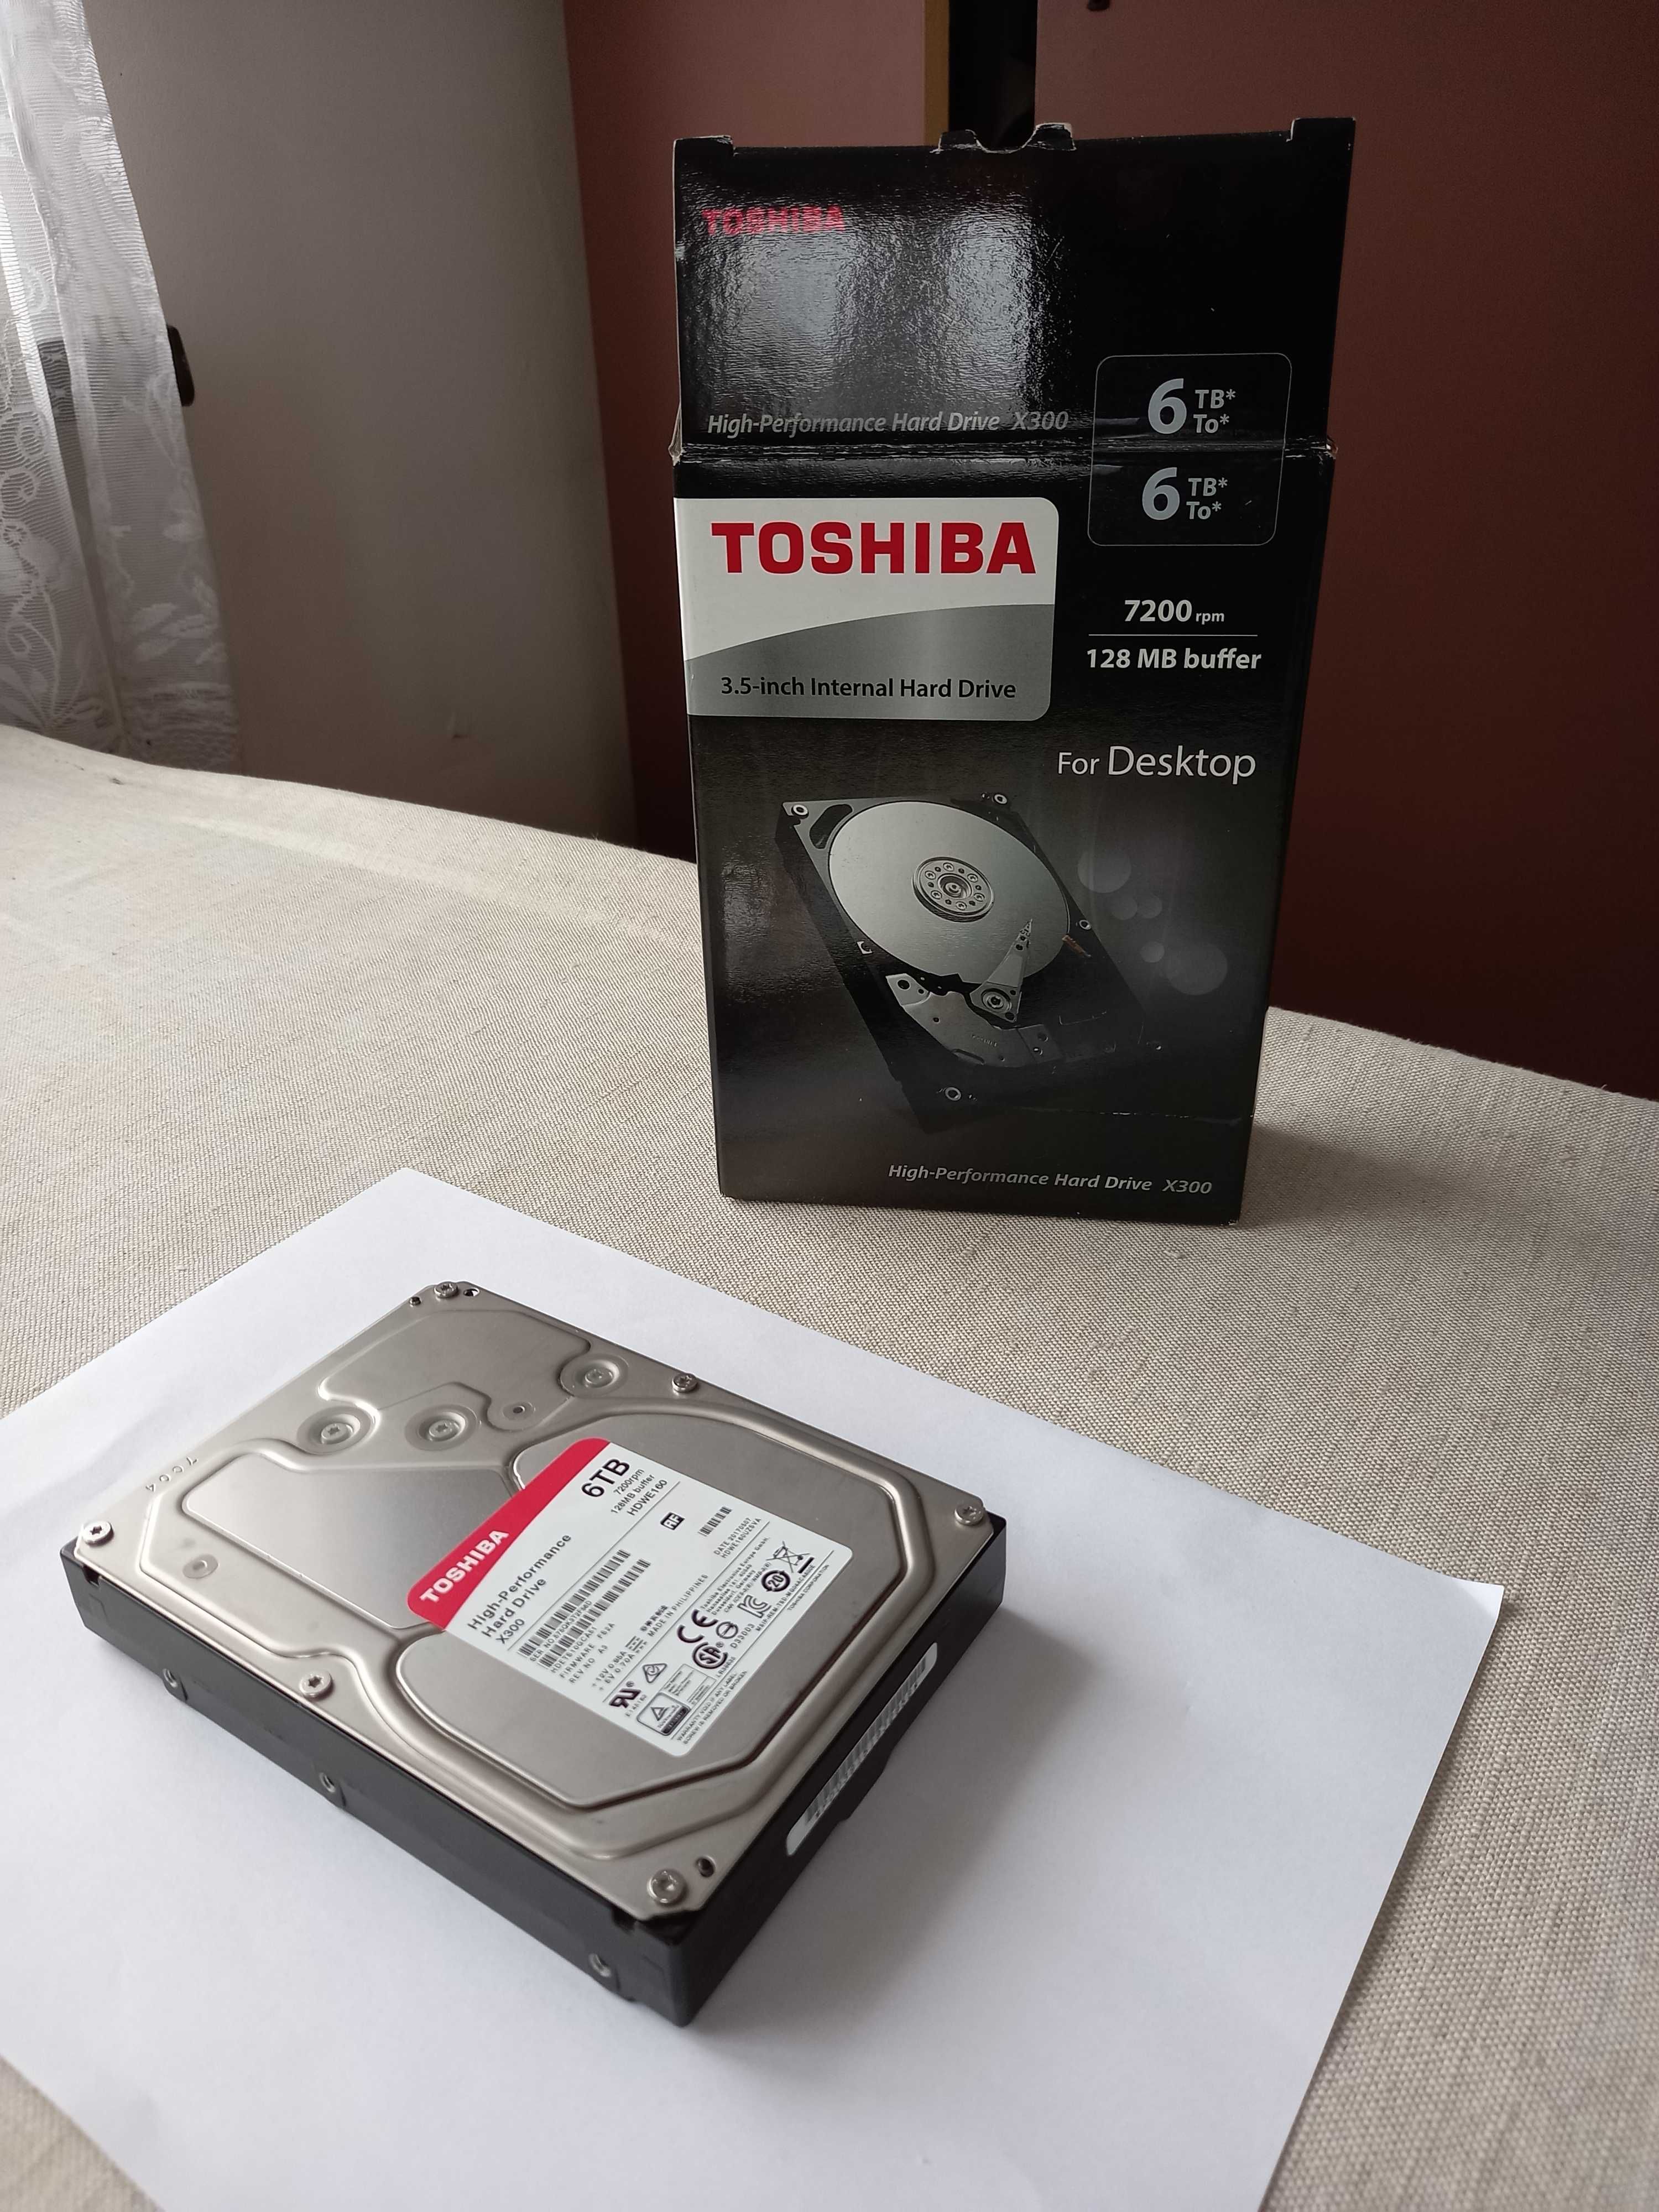 Dysk 6TB Toshiba HDWE160 SATA 3,5" 7200 RPM